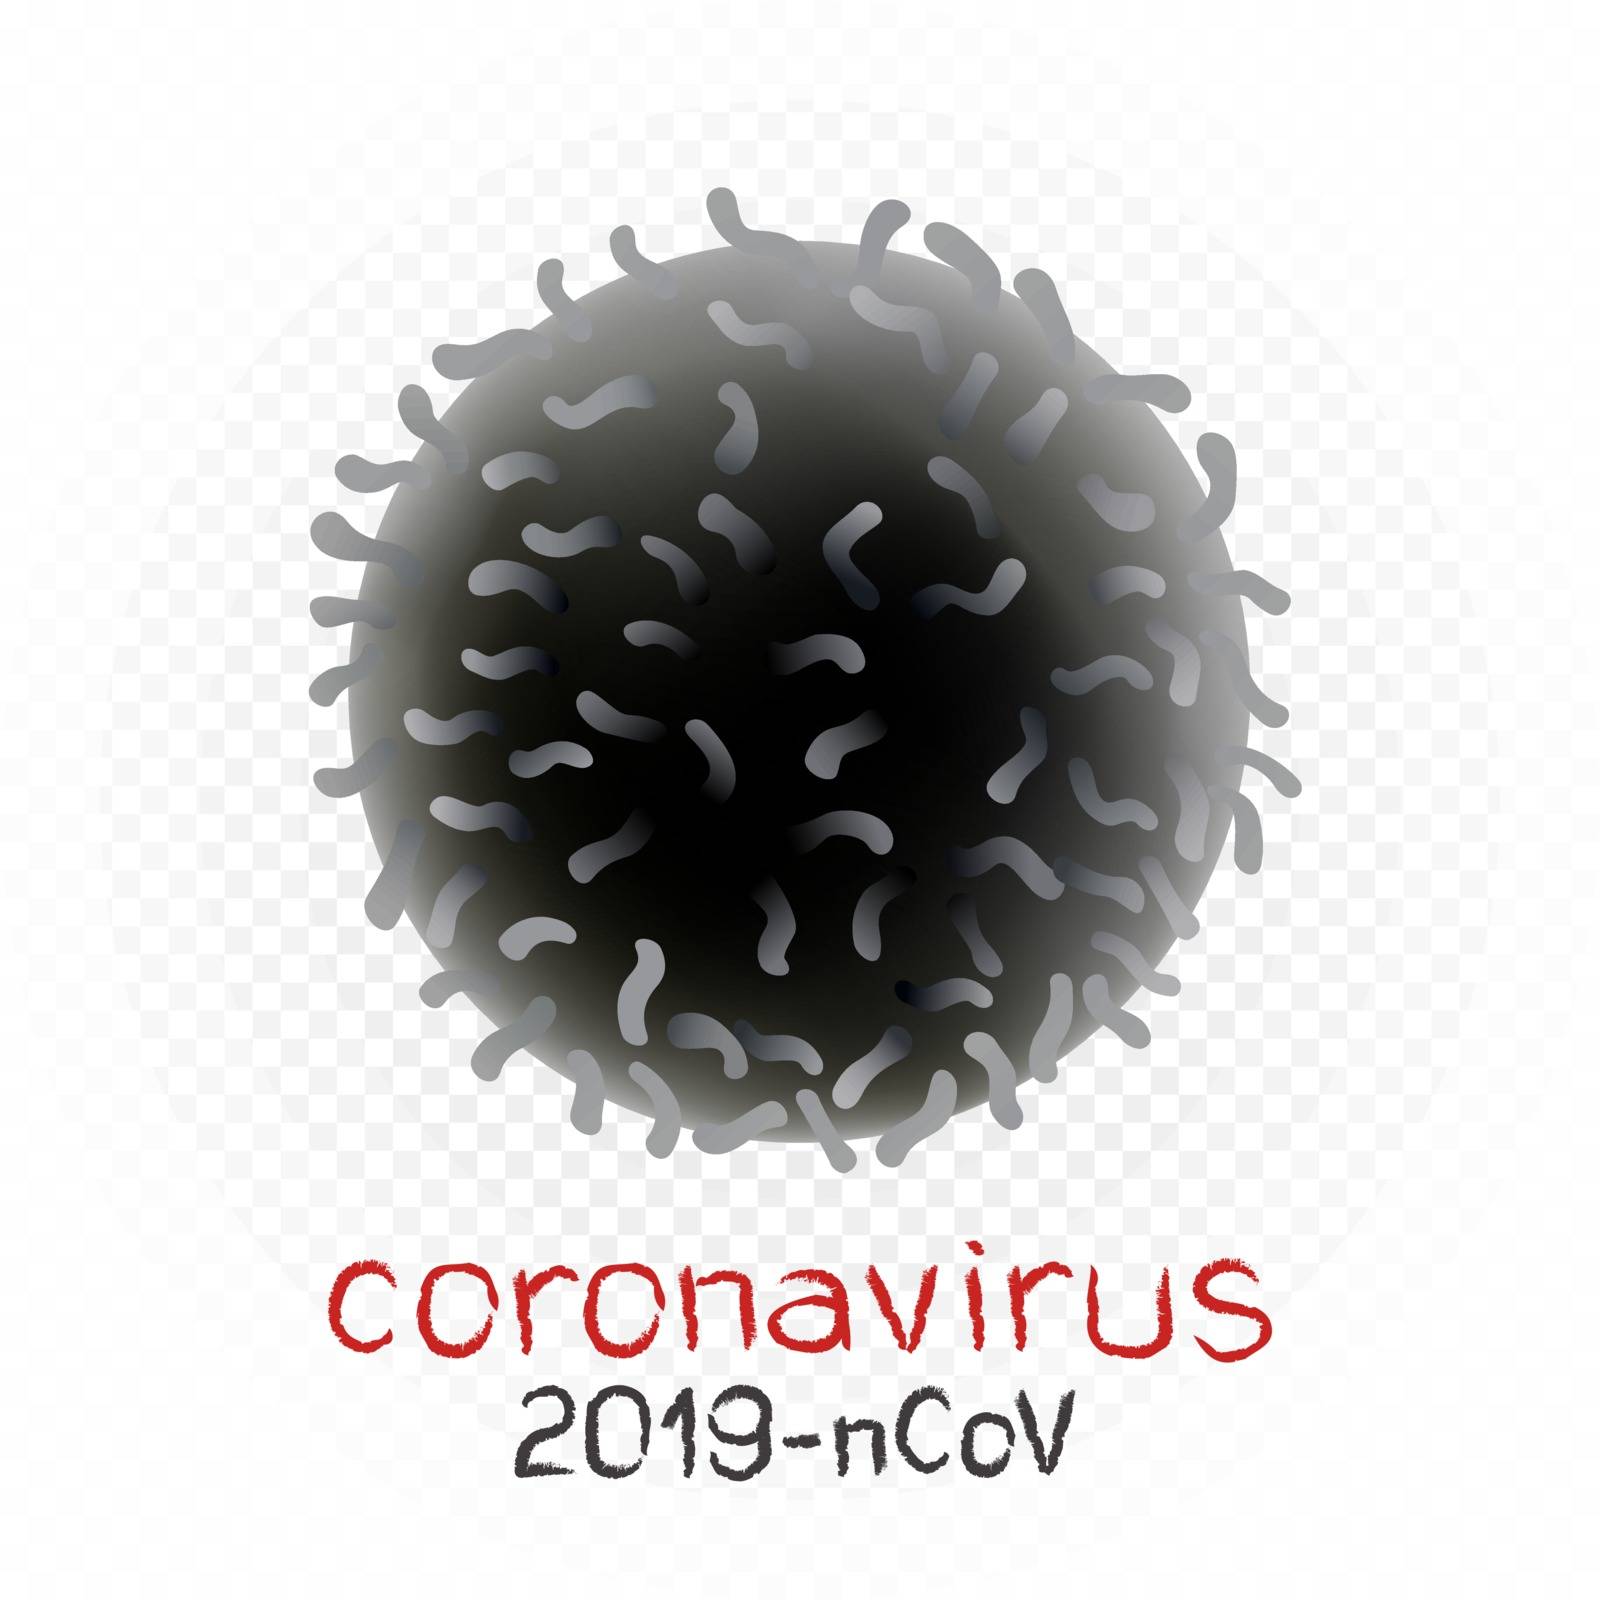 Coronavirus ign symbol illustration on white transparent background. 2019-nCoV virus microbe infection organism under the microscope